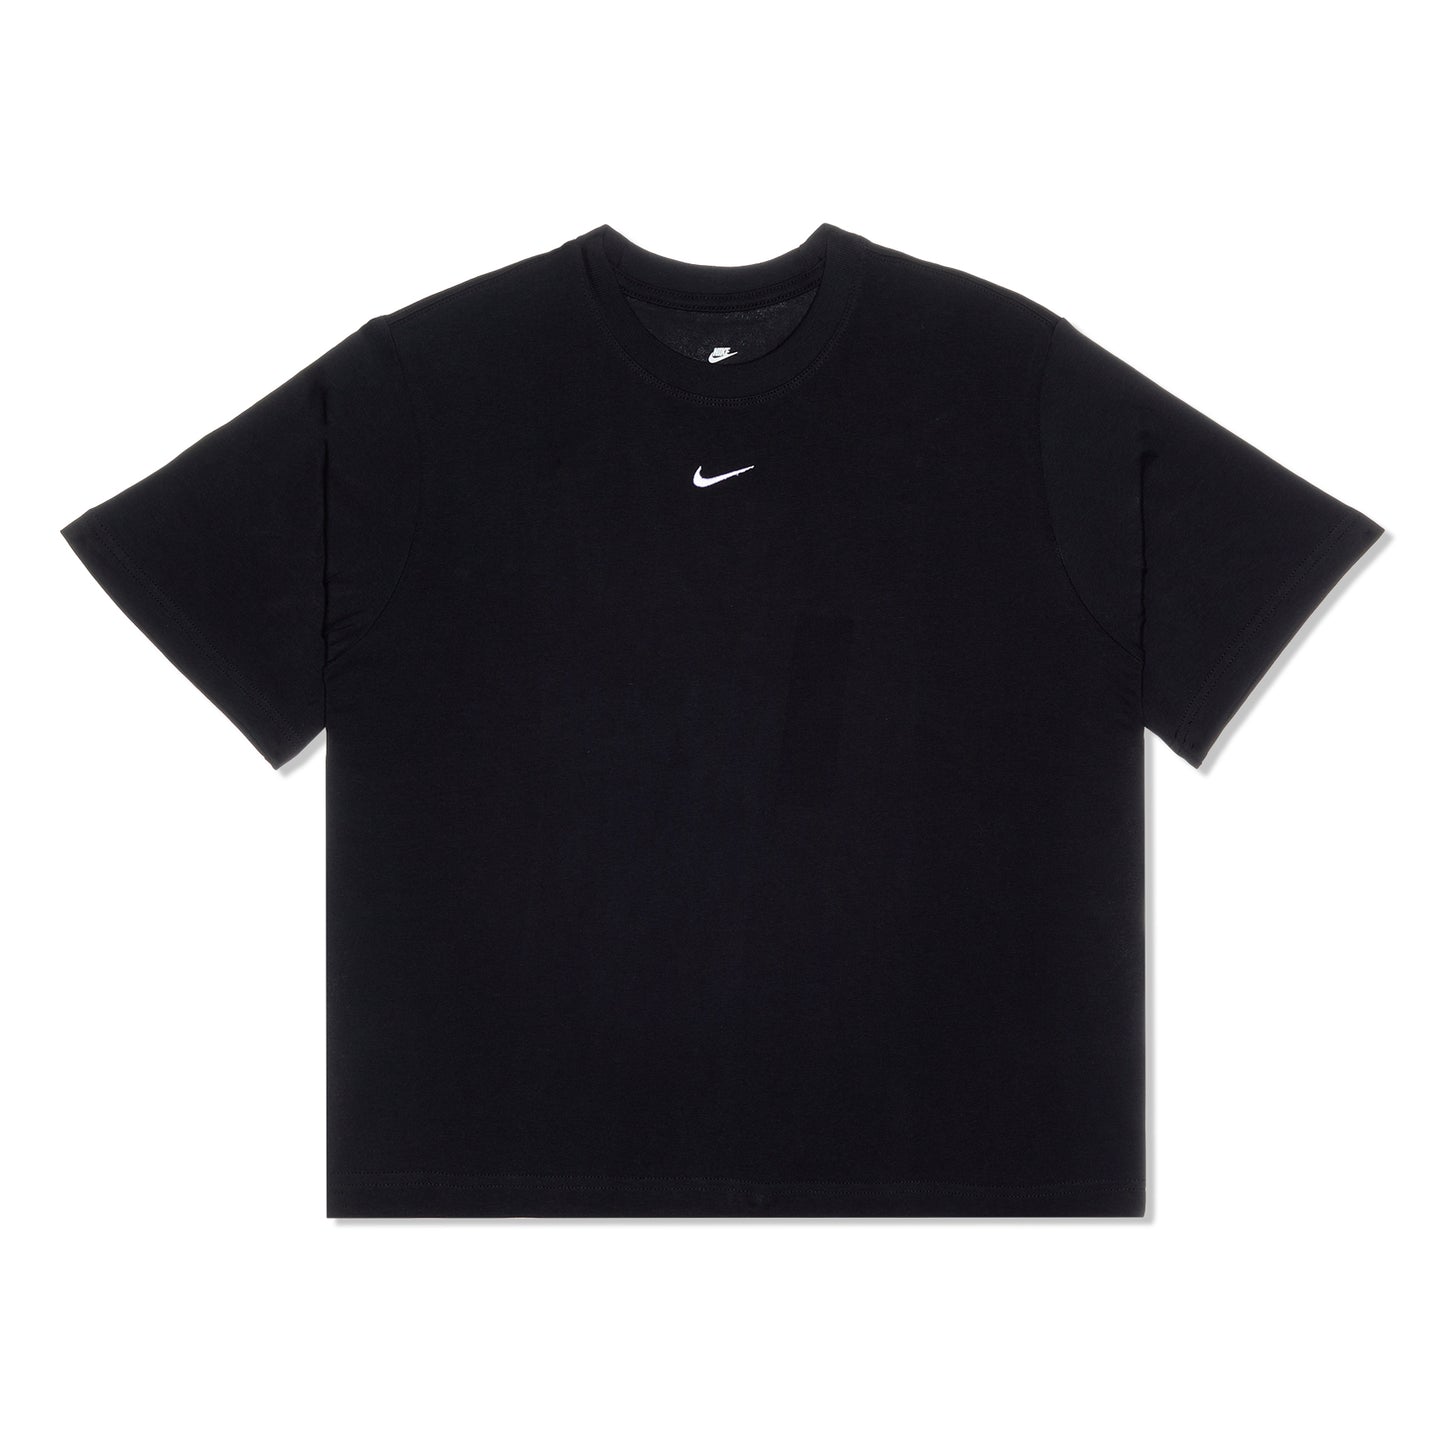 Nike Womens Sportswear Essential – (Black) Concepts T-Shirt